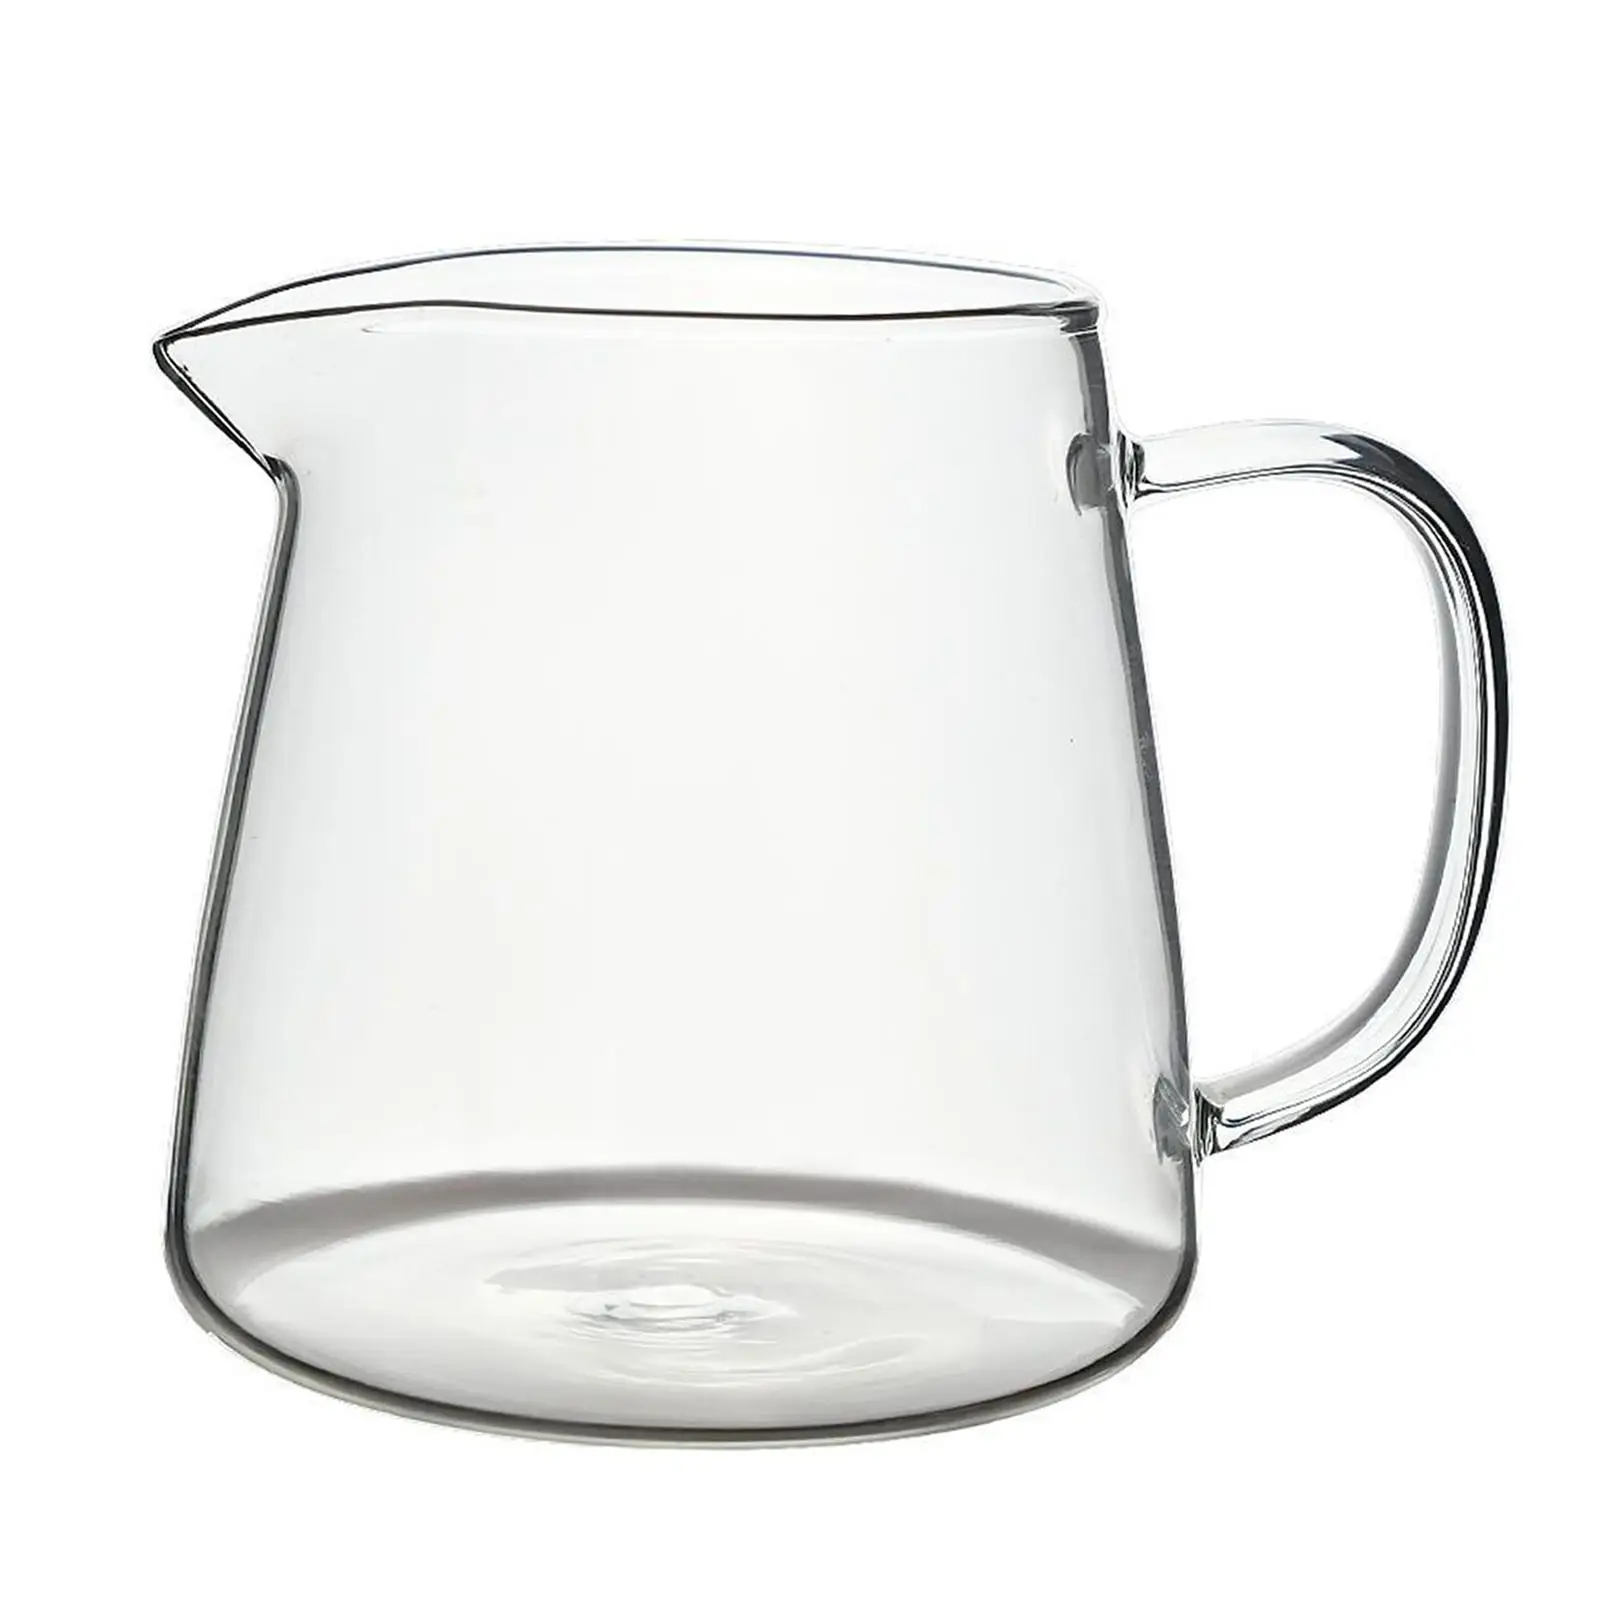 17oz High Borosilicate Glass Teapot Multifunctional Heat Resistant Blooming Tea Pot for Milk Juice Coffee Loose Leaf Gifts